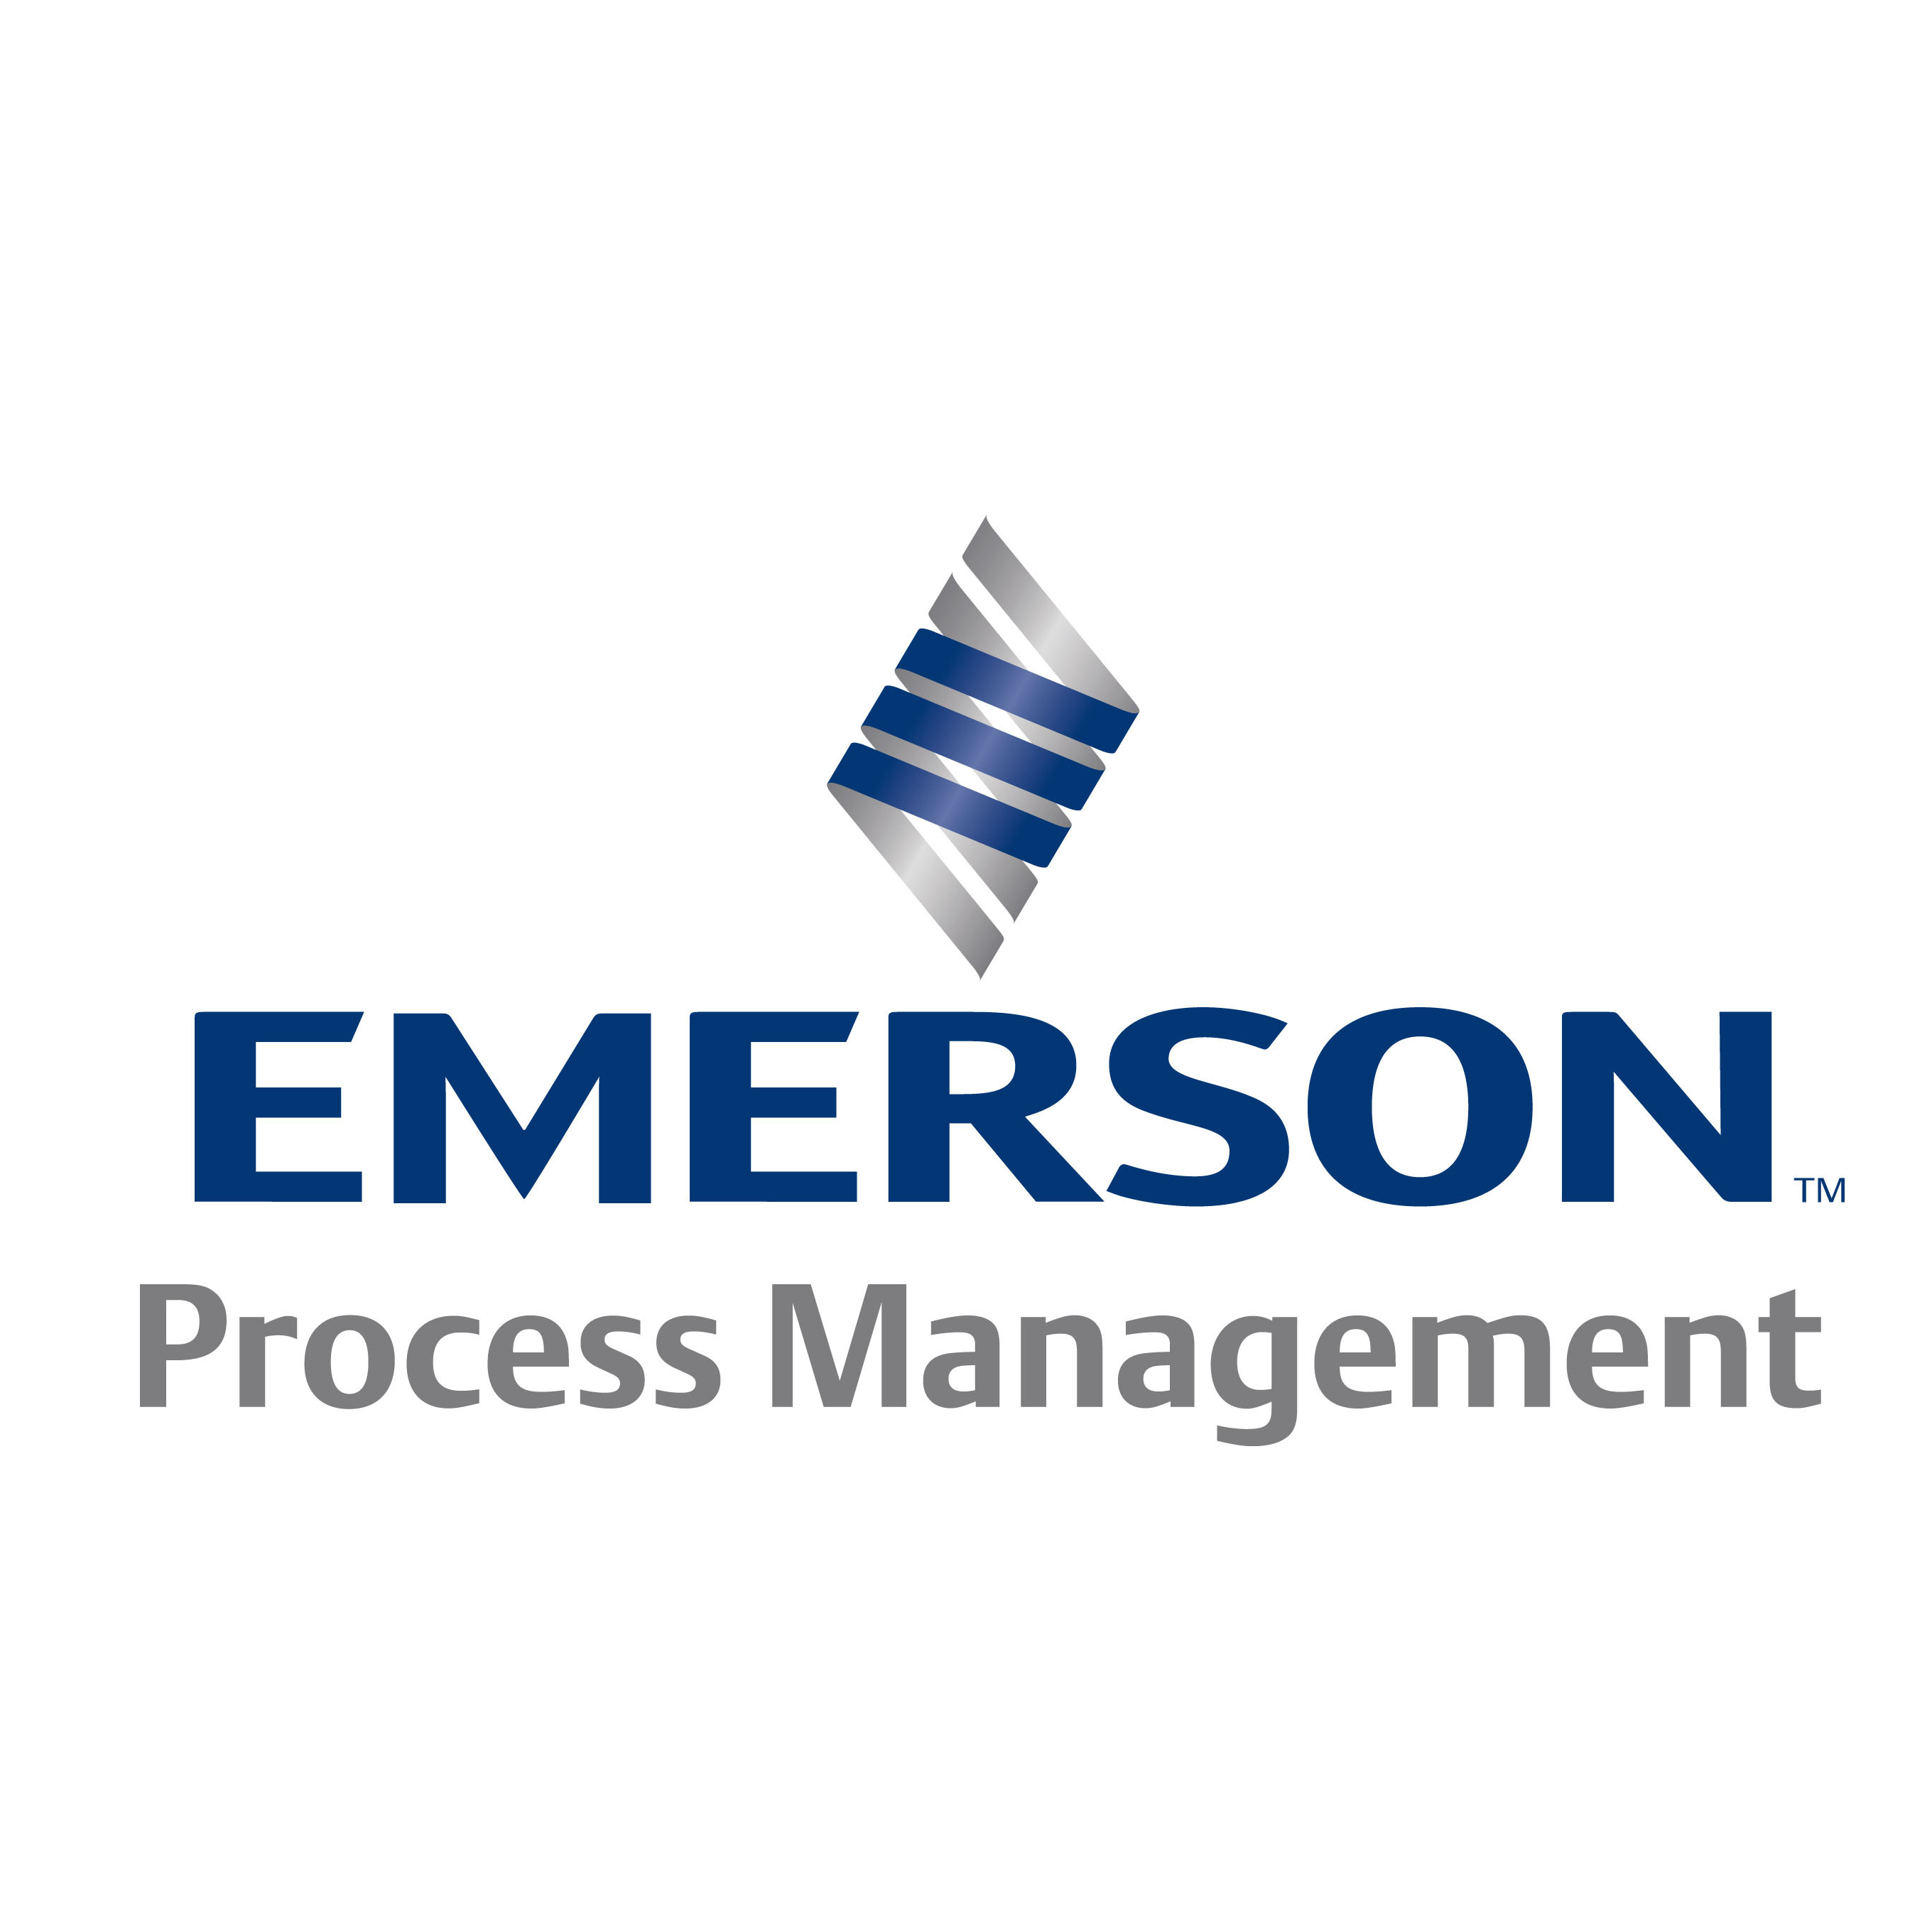 Emerson-PM-logo.jpg